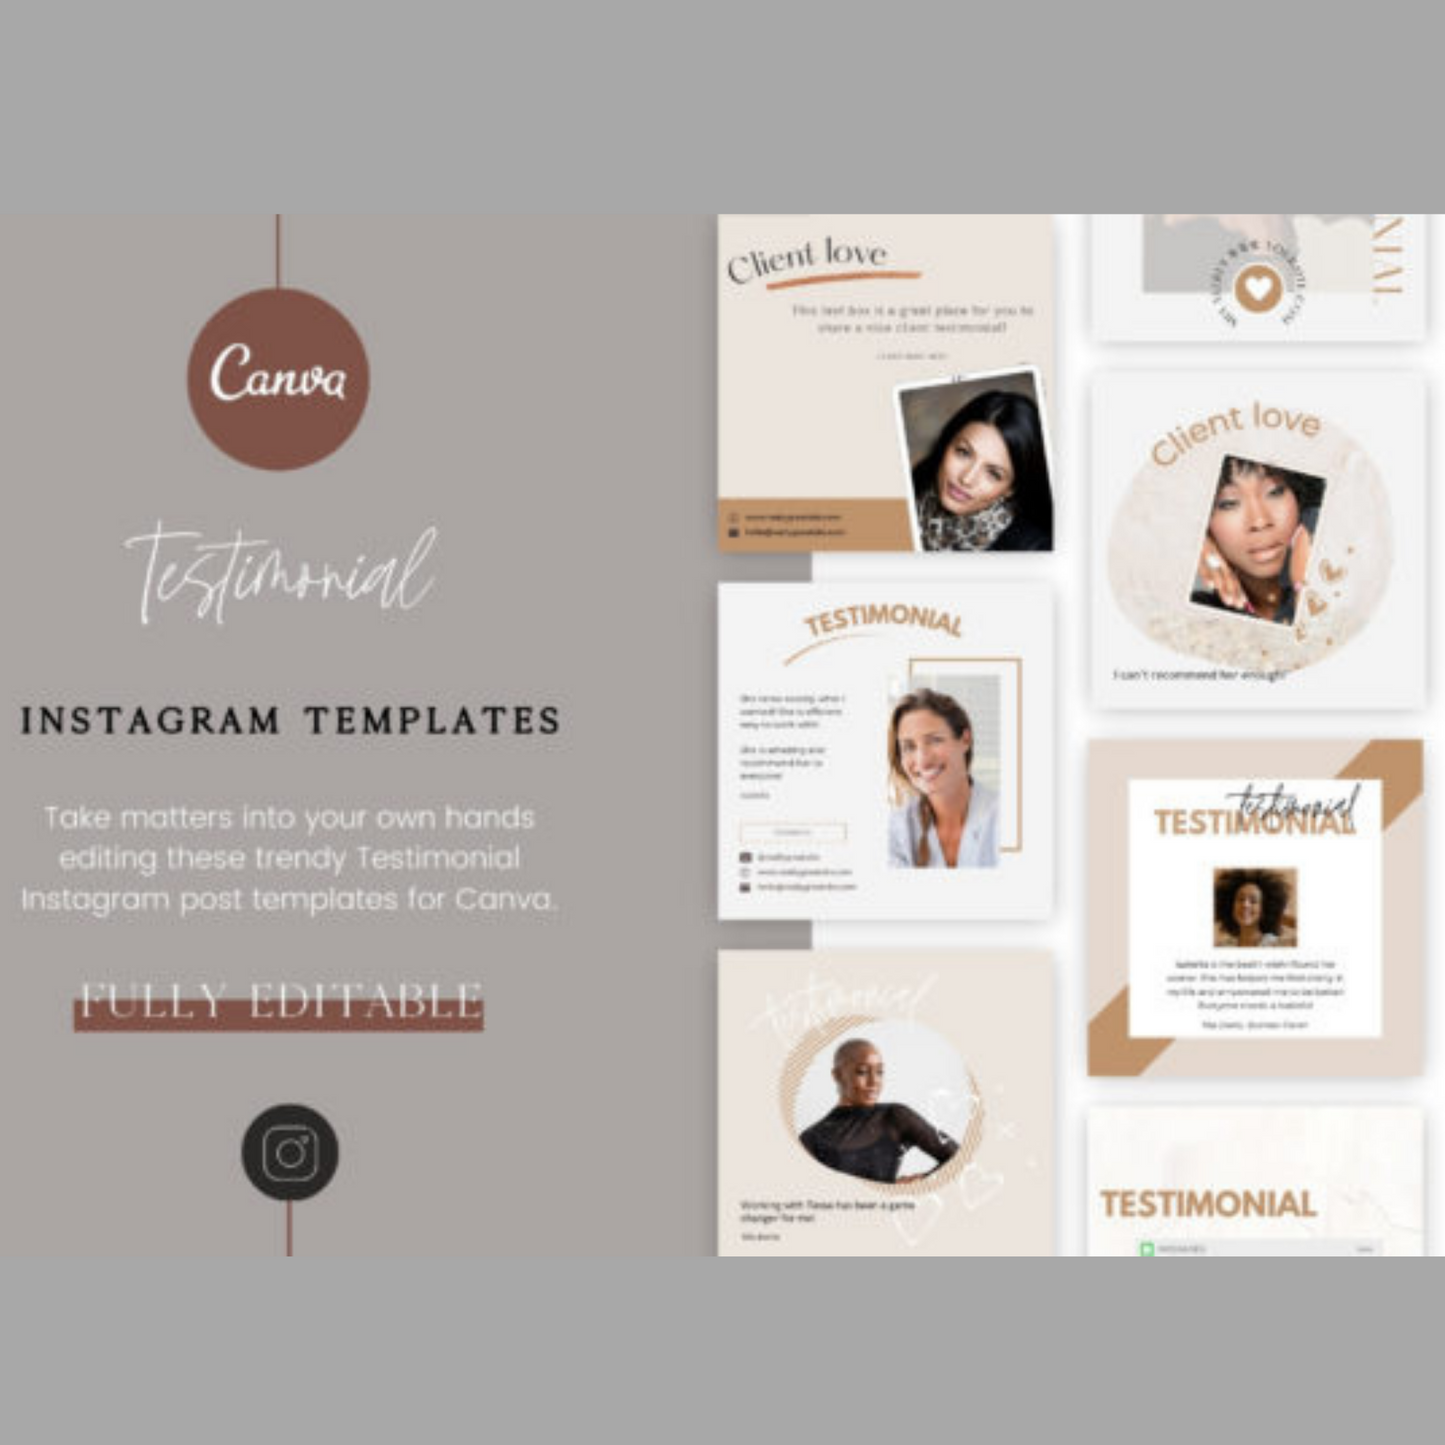 Client Testimonial Posts Templates | Entrepreneur Social Media Posts. Use Canva | Instagram Posts| Real Estate Customer Reviews | Marketing